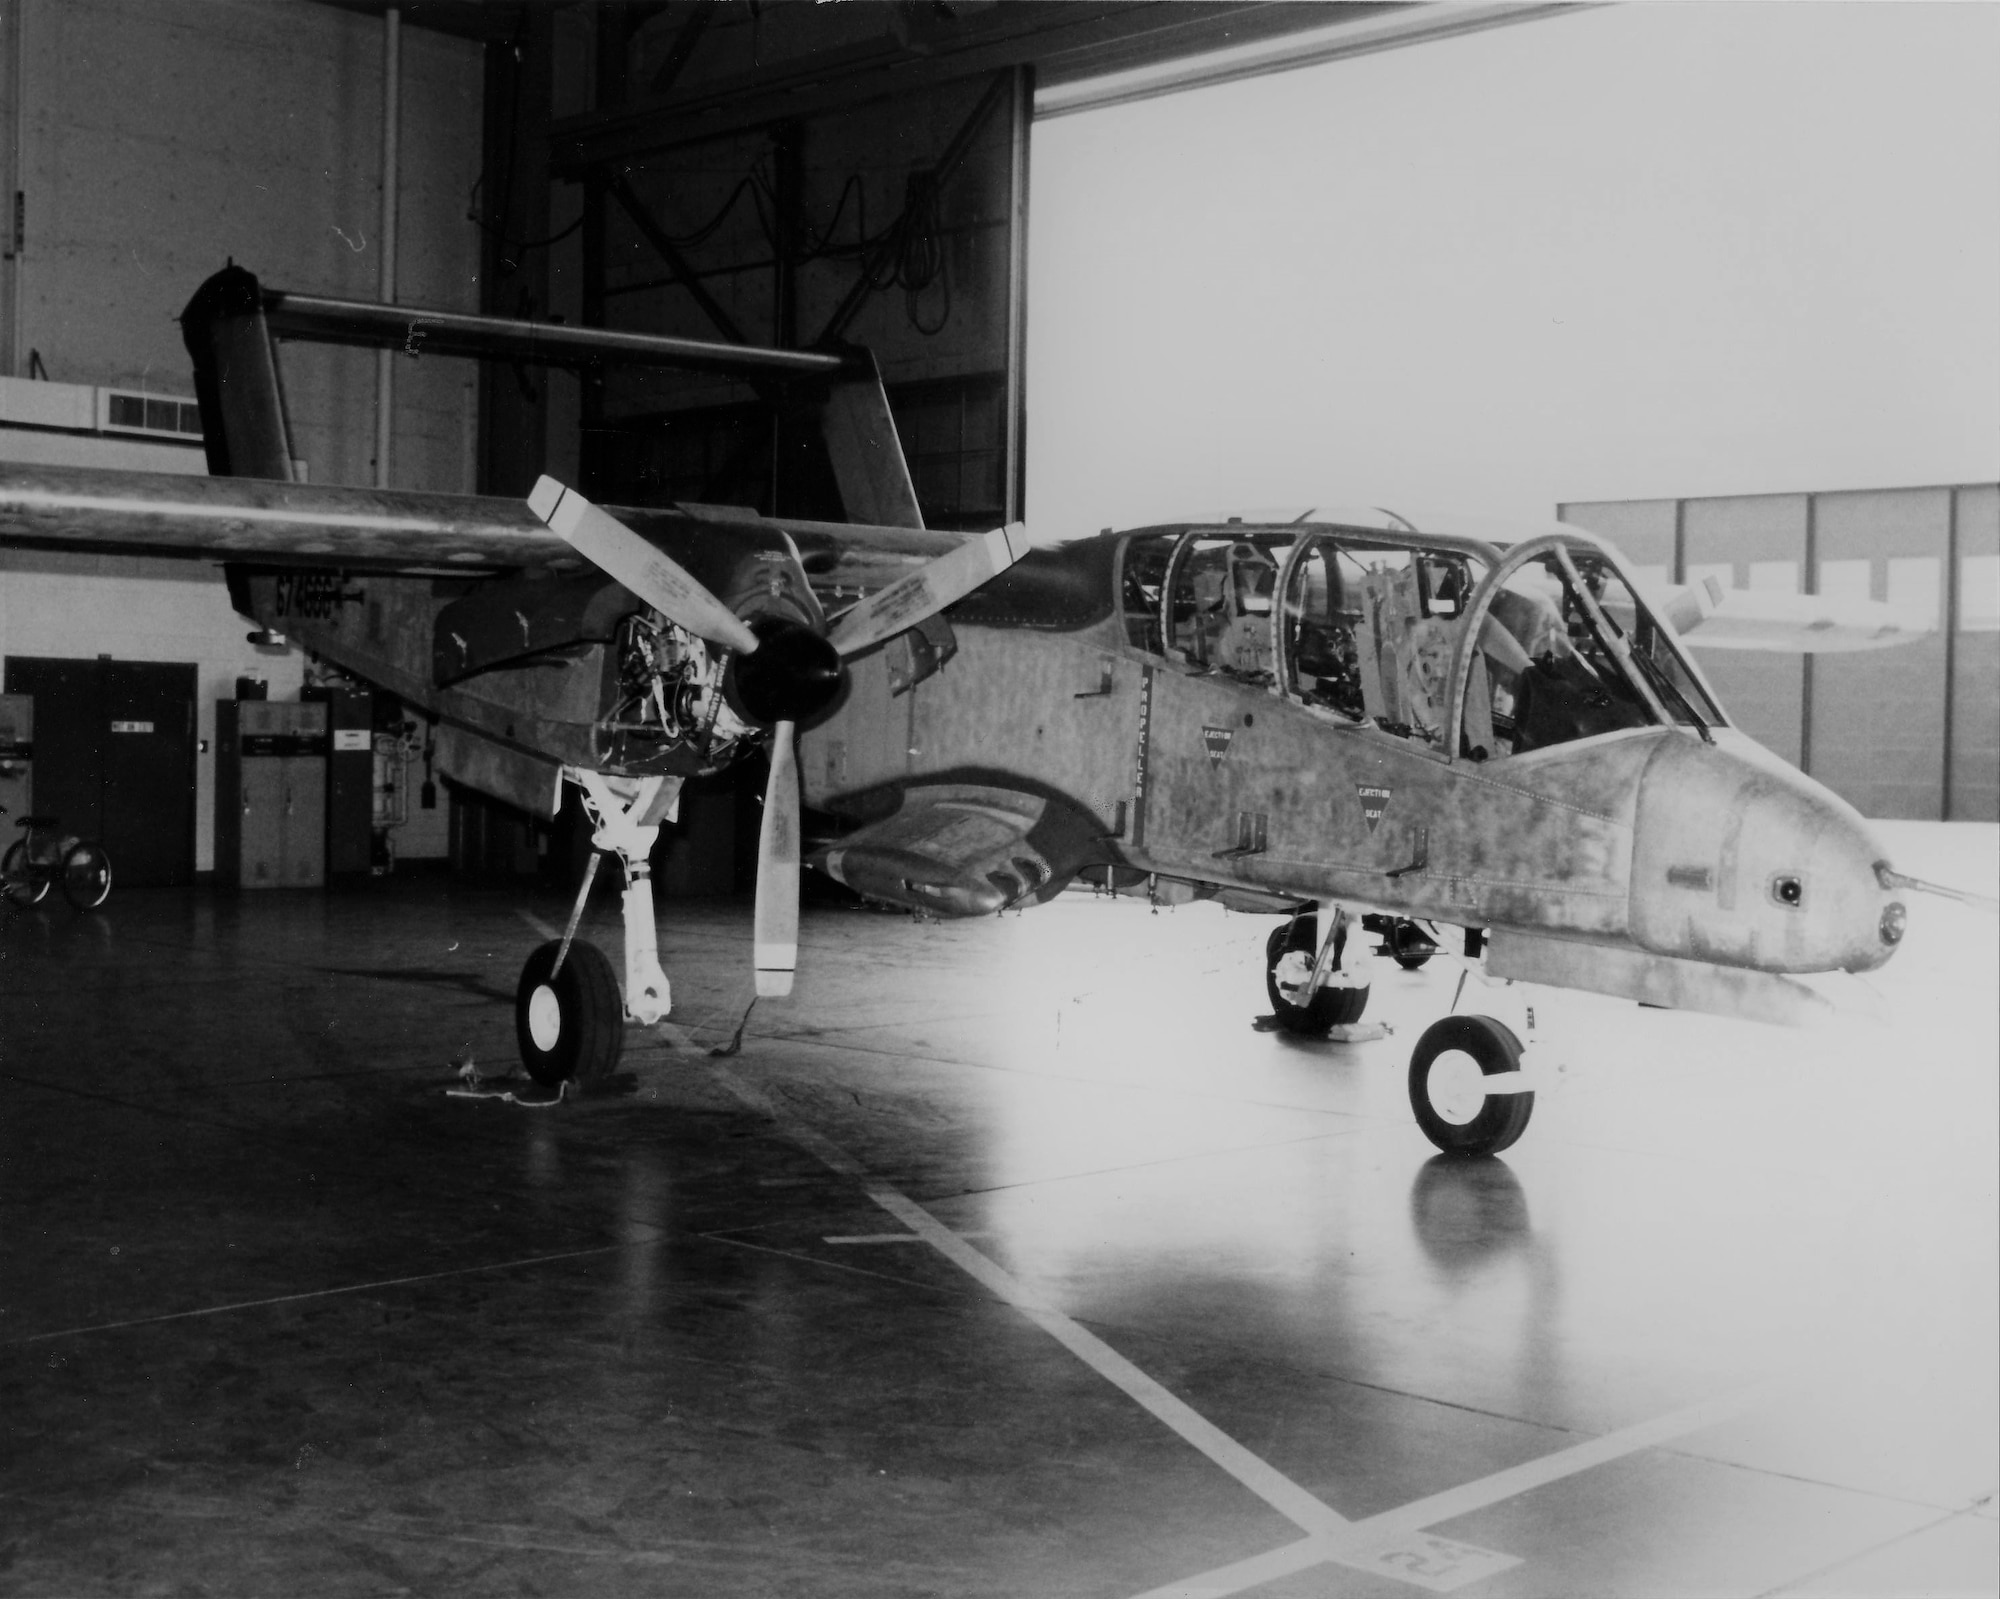 An OV-10 Bronco aircraft sits inside a hangar.